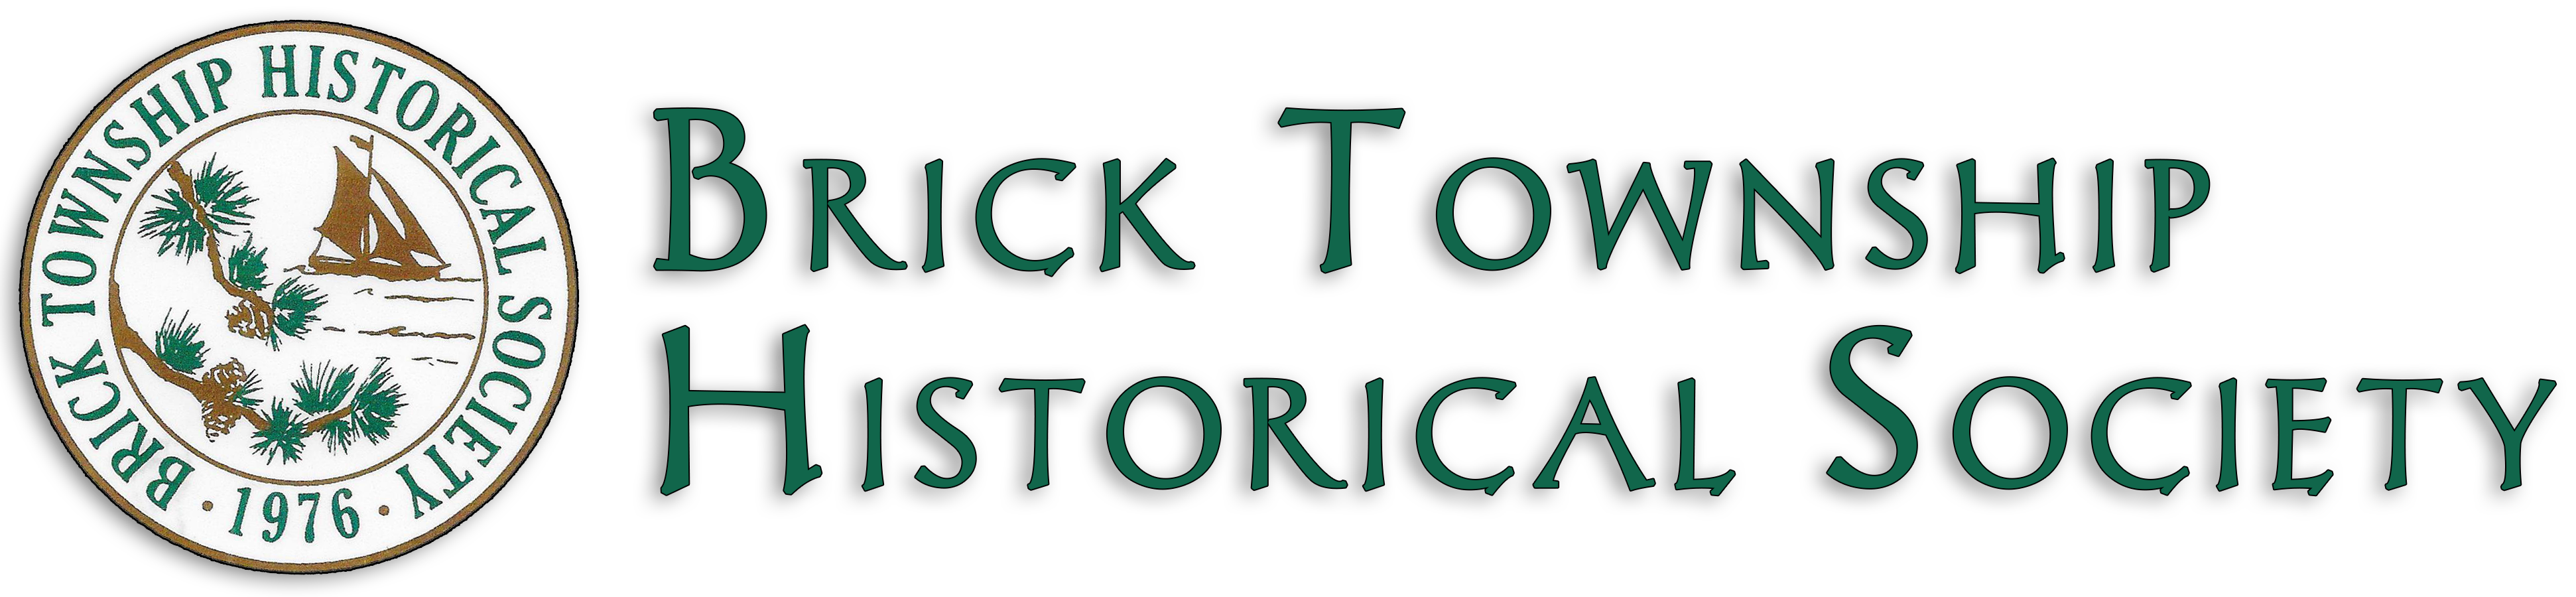 Brick Township Historical Society